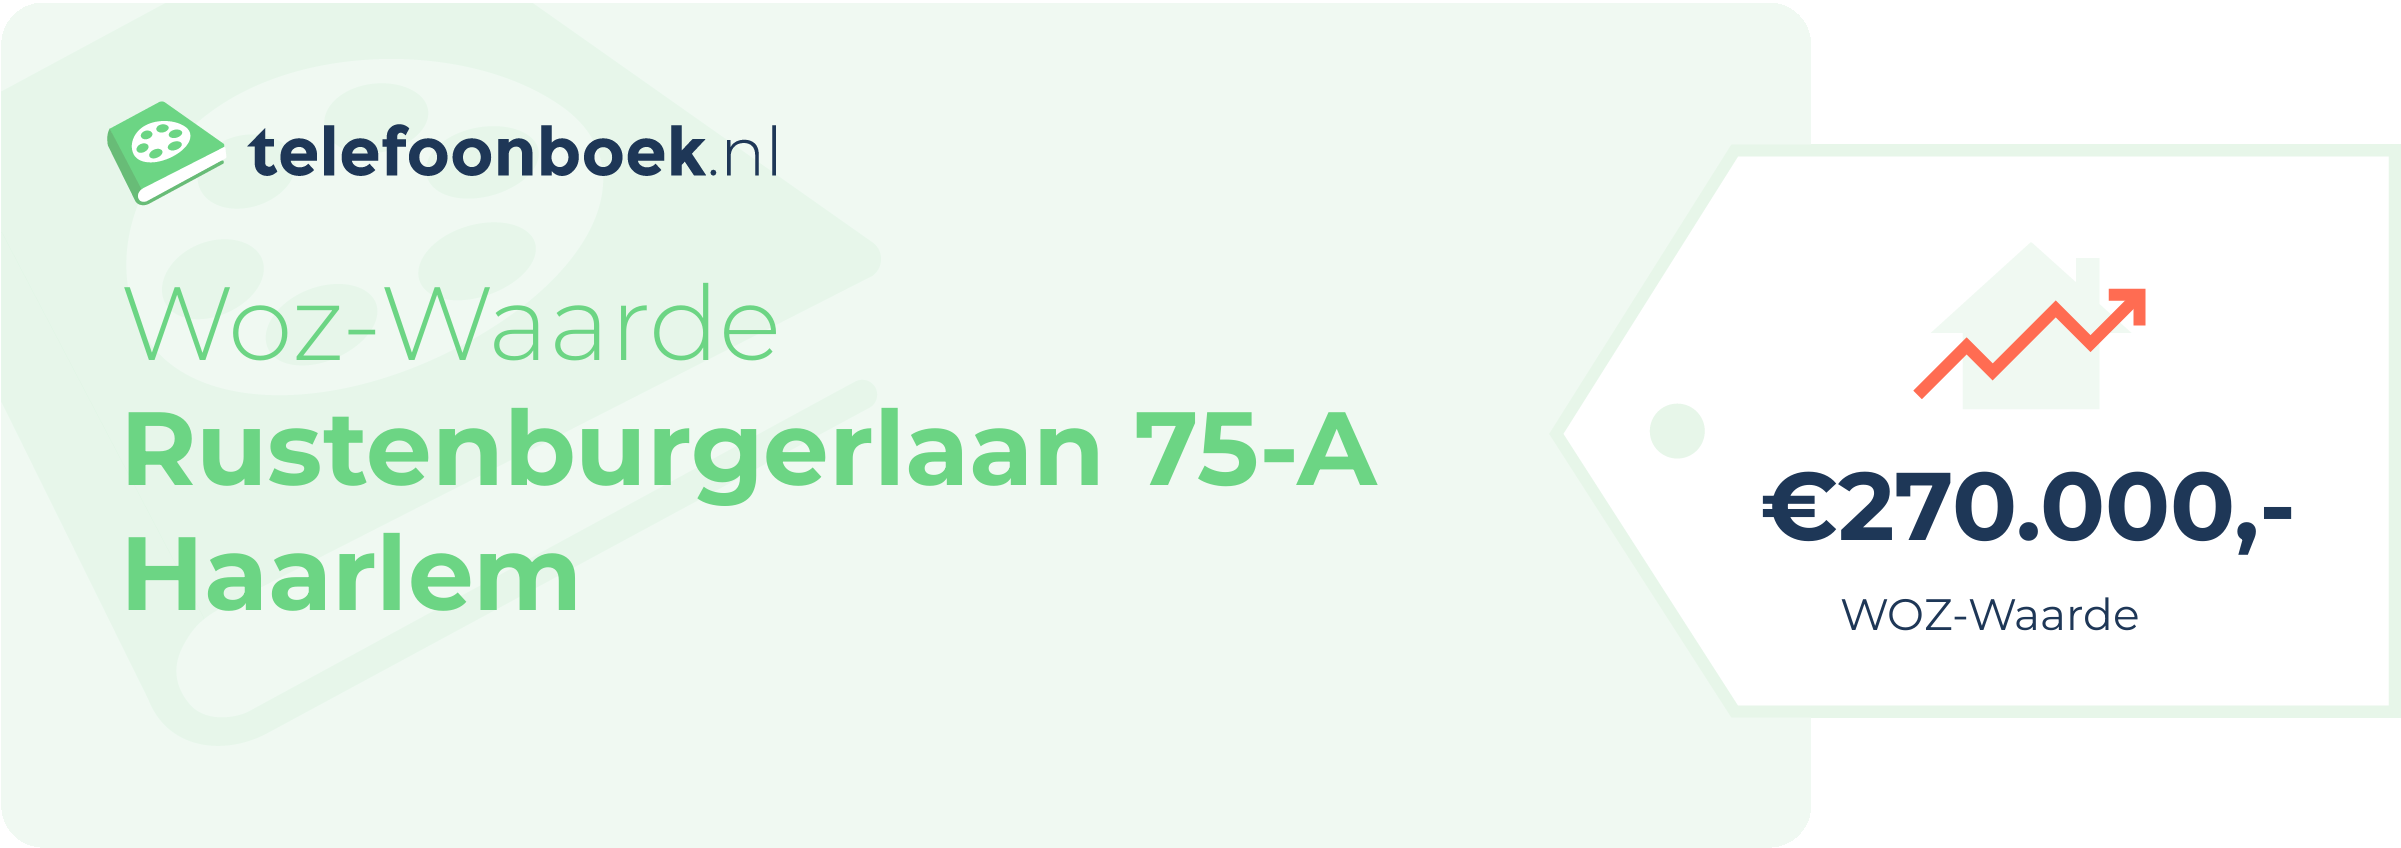 WOZ-waarde Rustenburgerlaan 75-A Haarlem